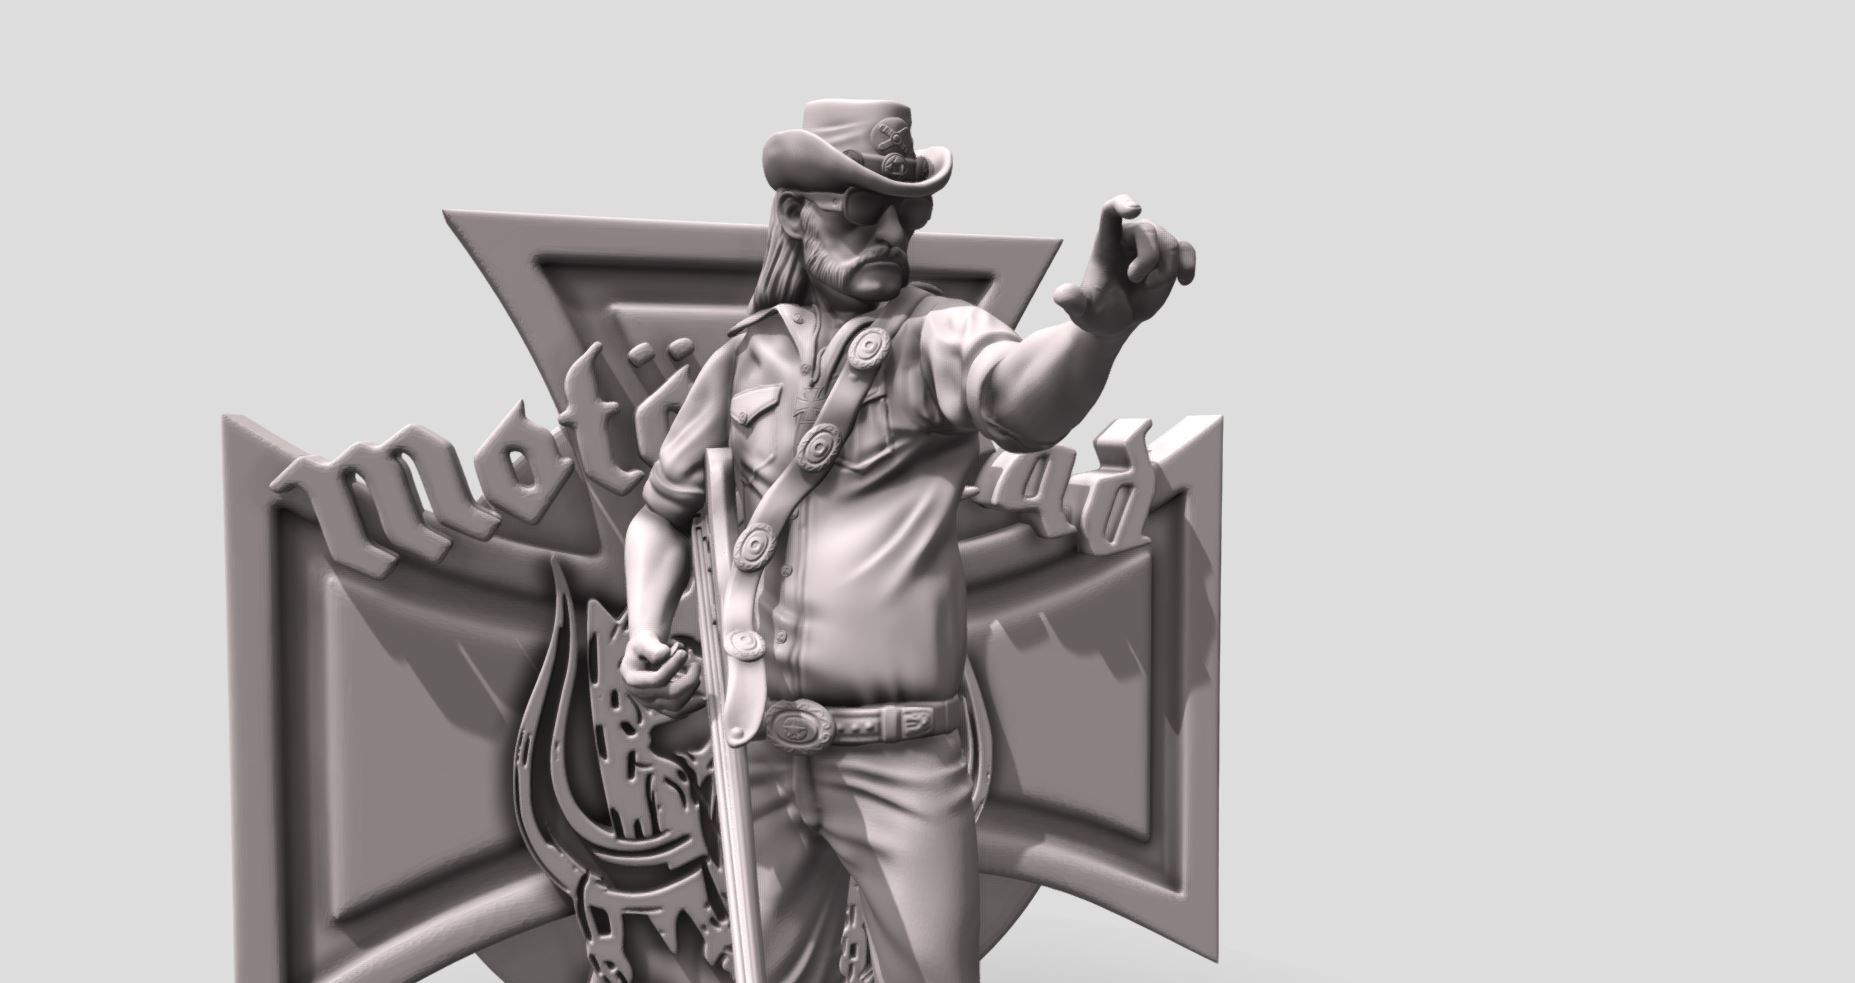 8.jpg Download STL file Lemmy Kilmister motorhead - 3Dprinting 3D • 3D printable template, ronnie_yonk